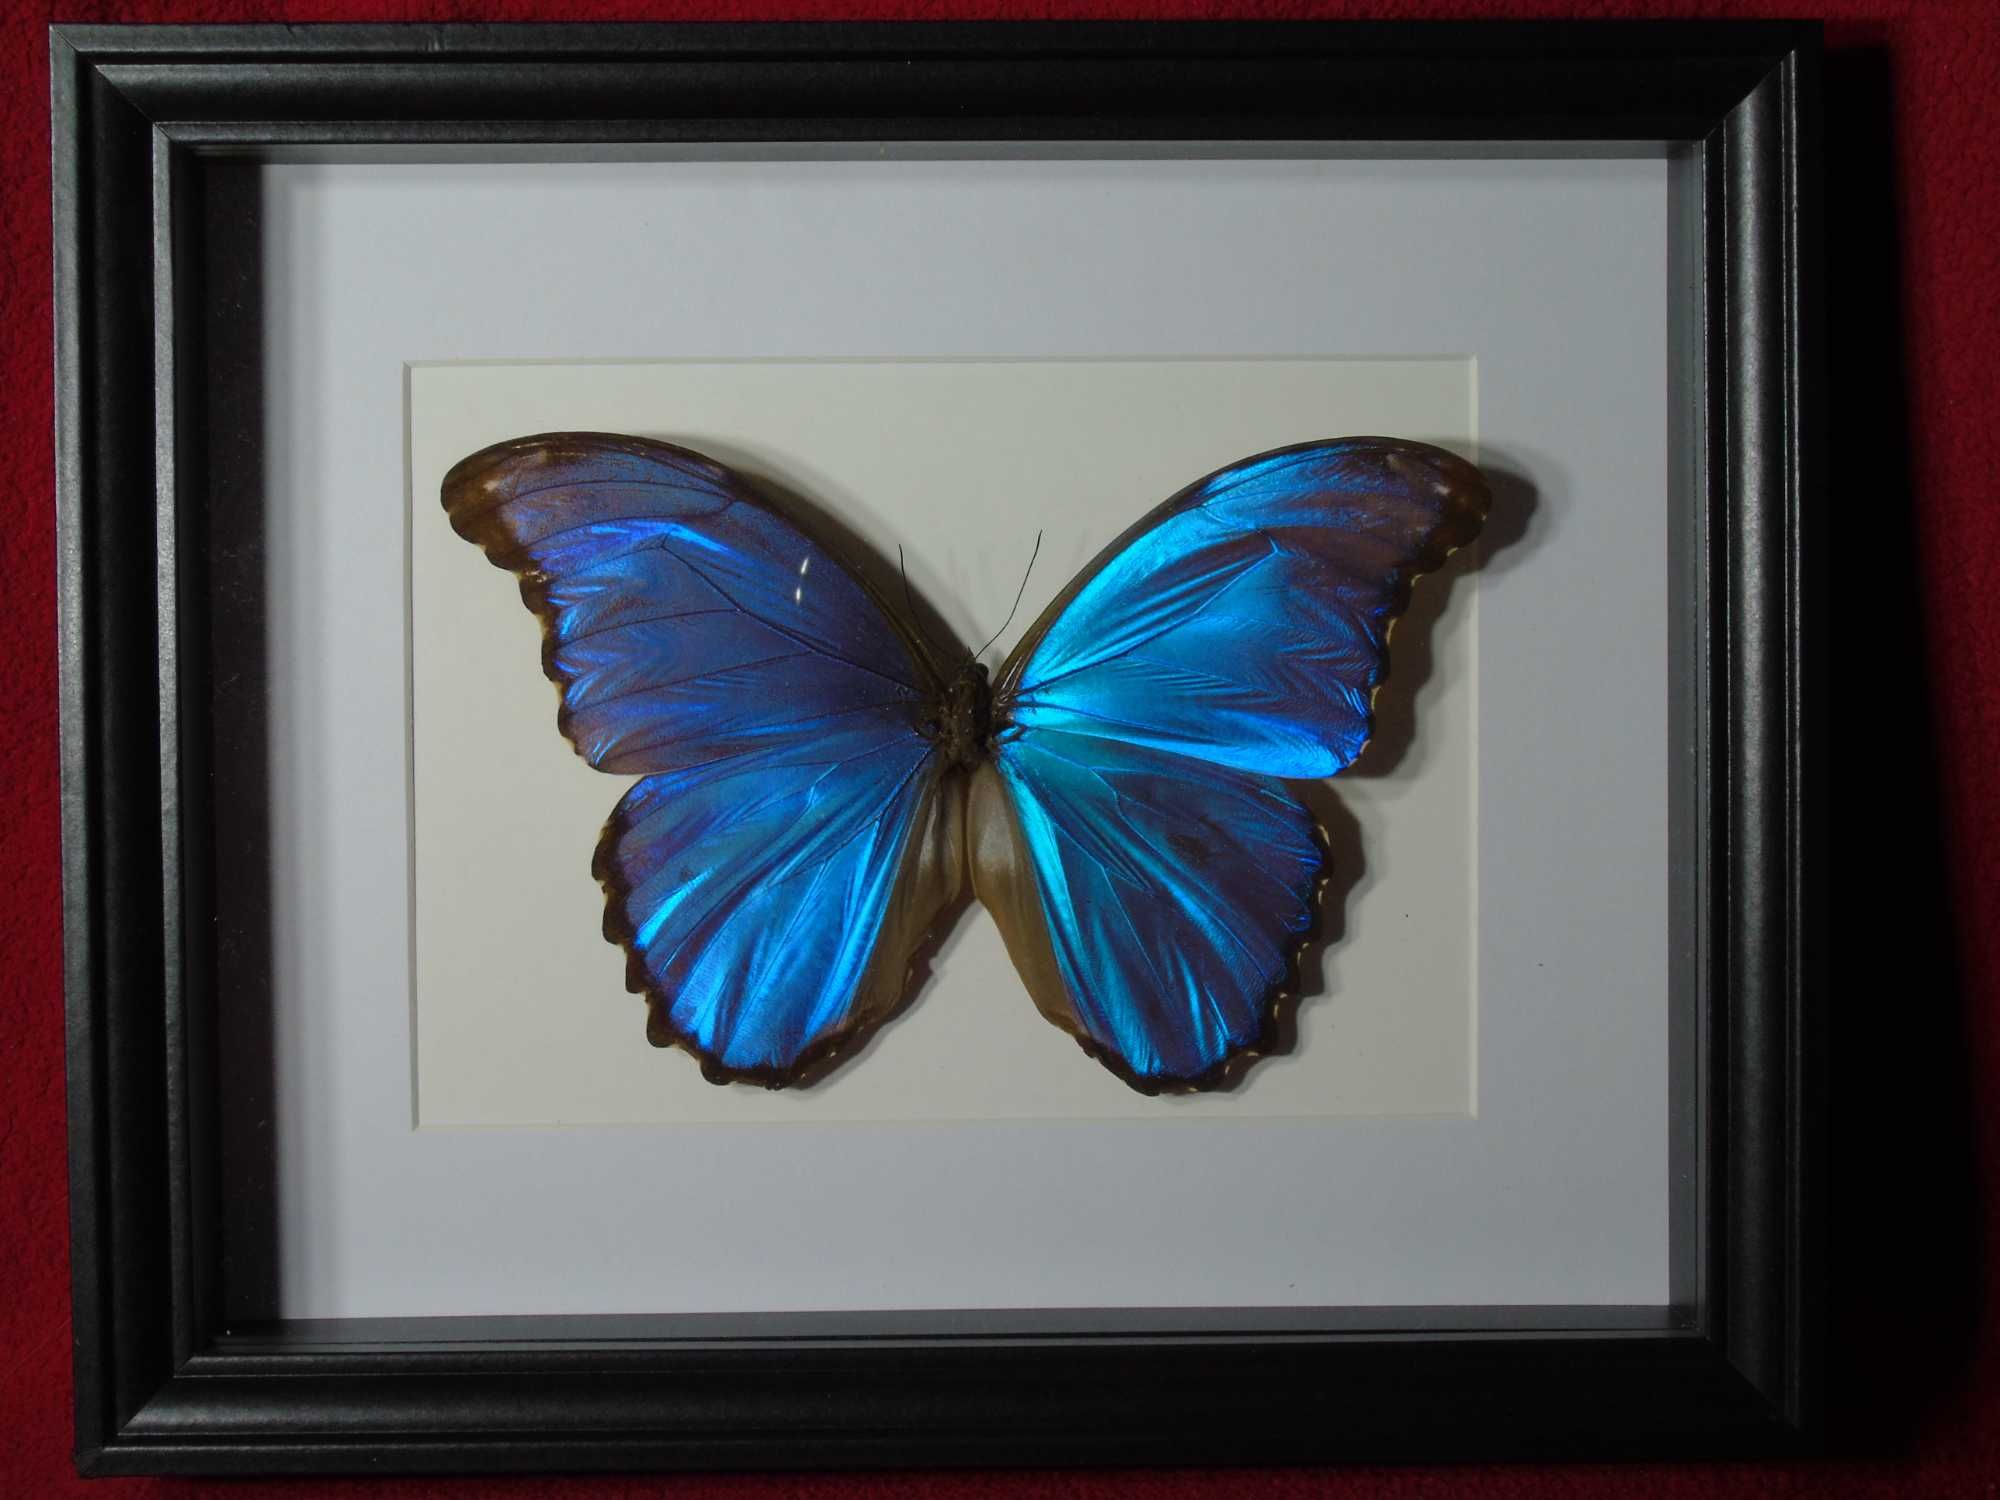 Motyl w ramce / gablotce 27 x 22 cm . Morpho godartii tingomariensis .